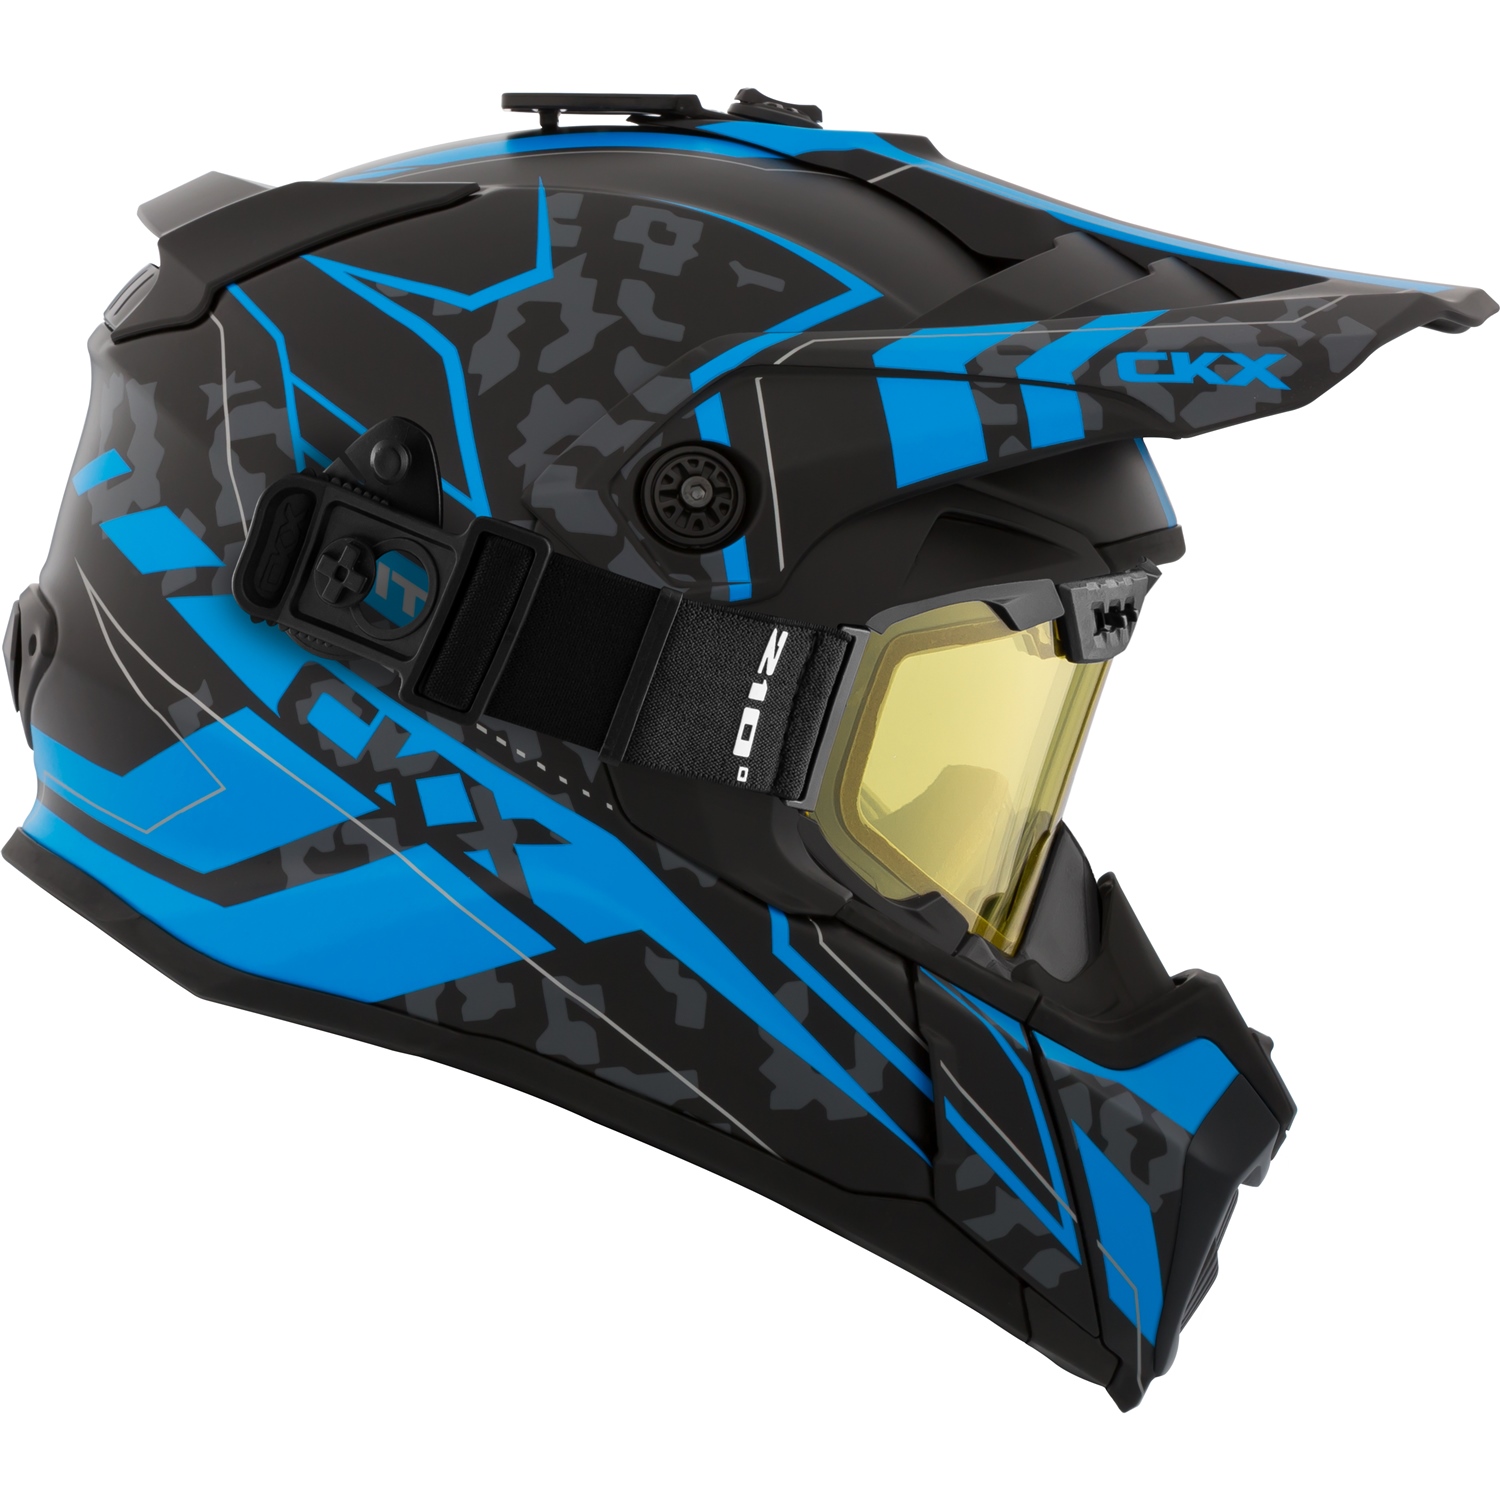 Ckx Titan Helmet Factory Sale, 52% OFF | www.ingeniovirtual.com